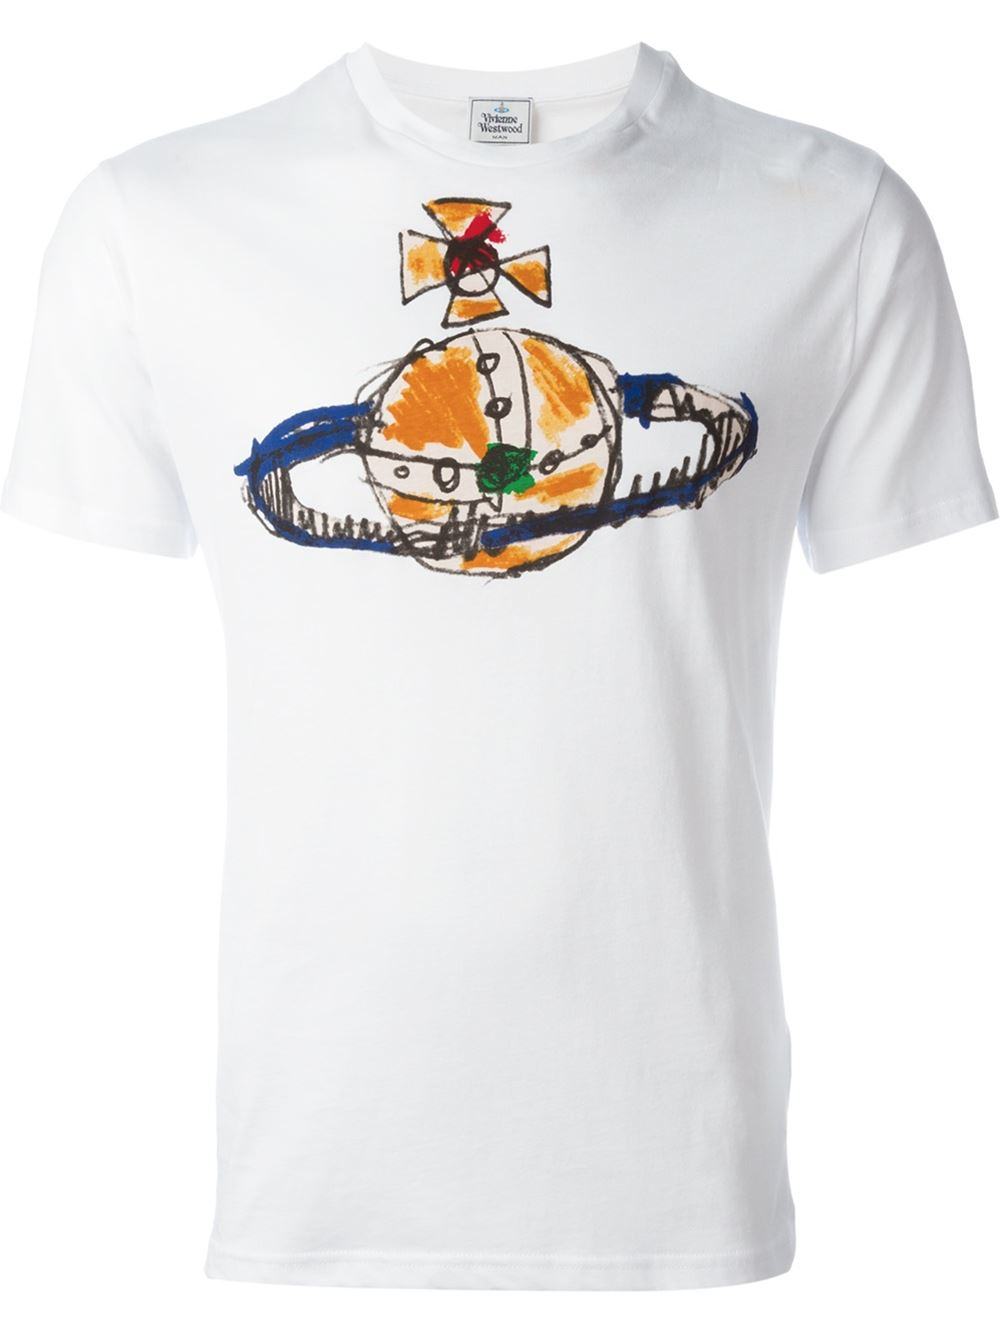 Lyst - Vivienne Westwood Orbit Print T-shirt in White for Men